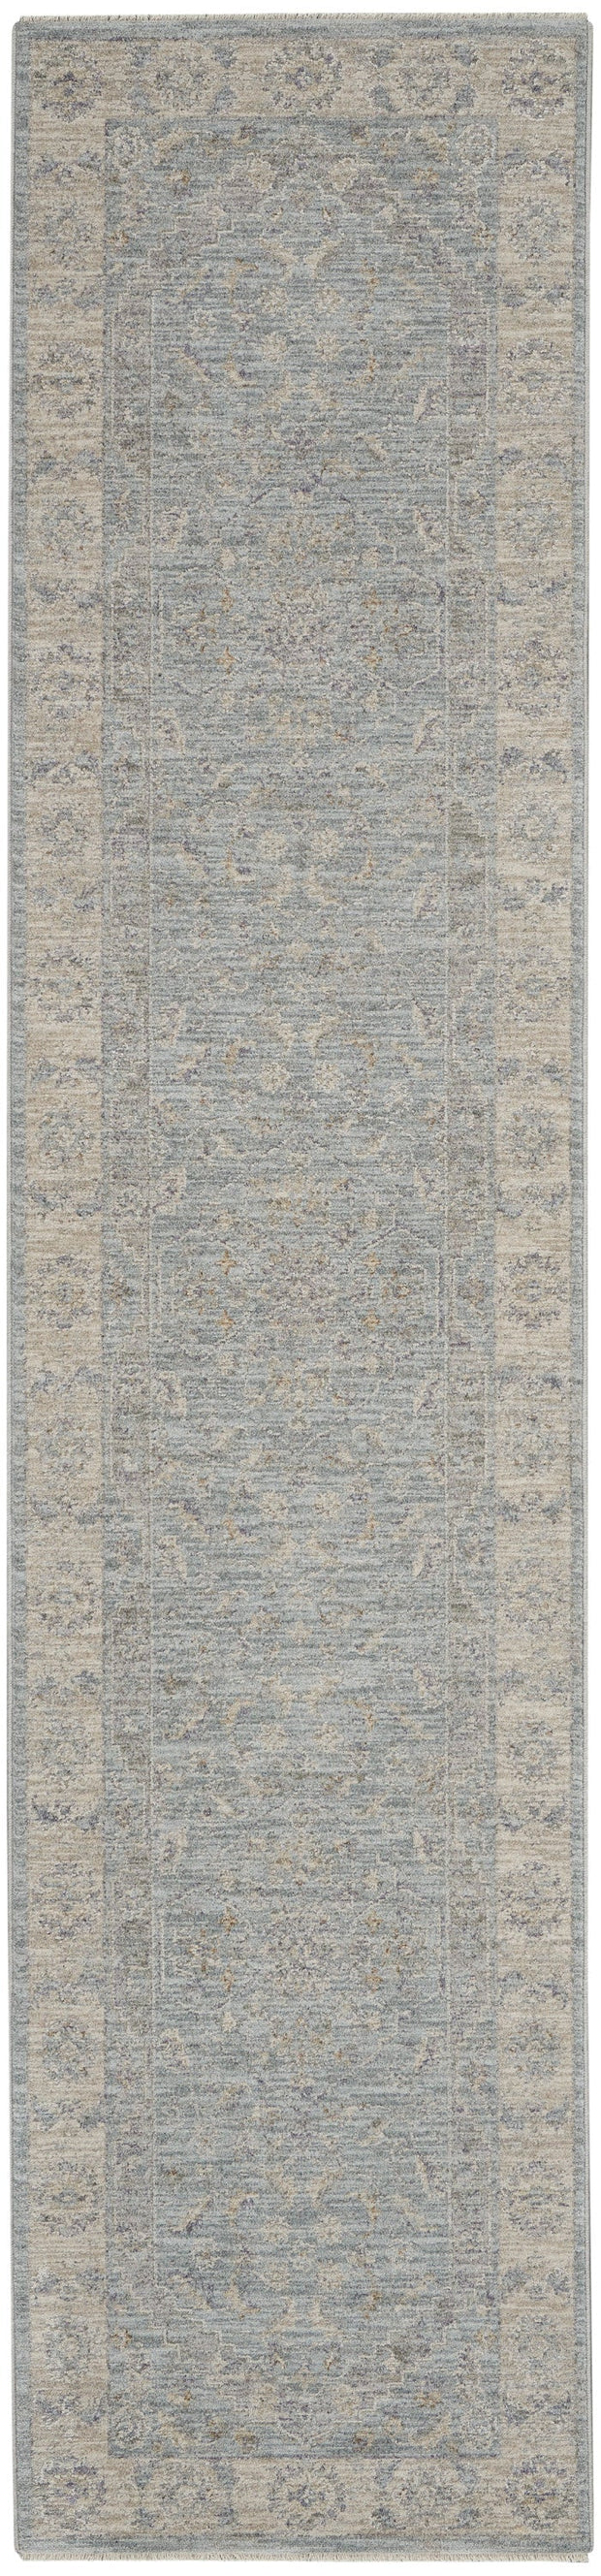 infinite blue rug by nourison 99446805522 redo 2